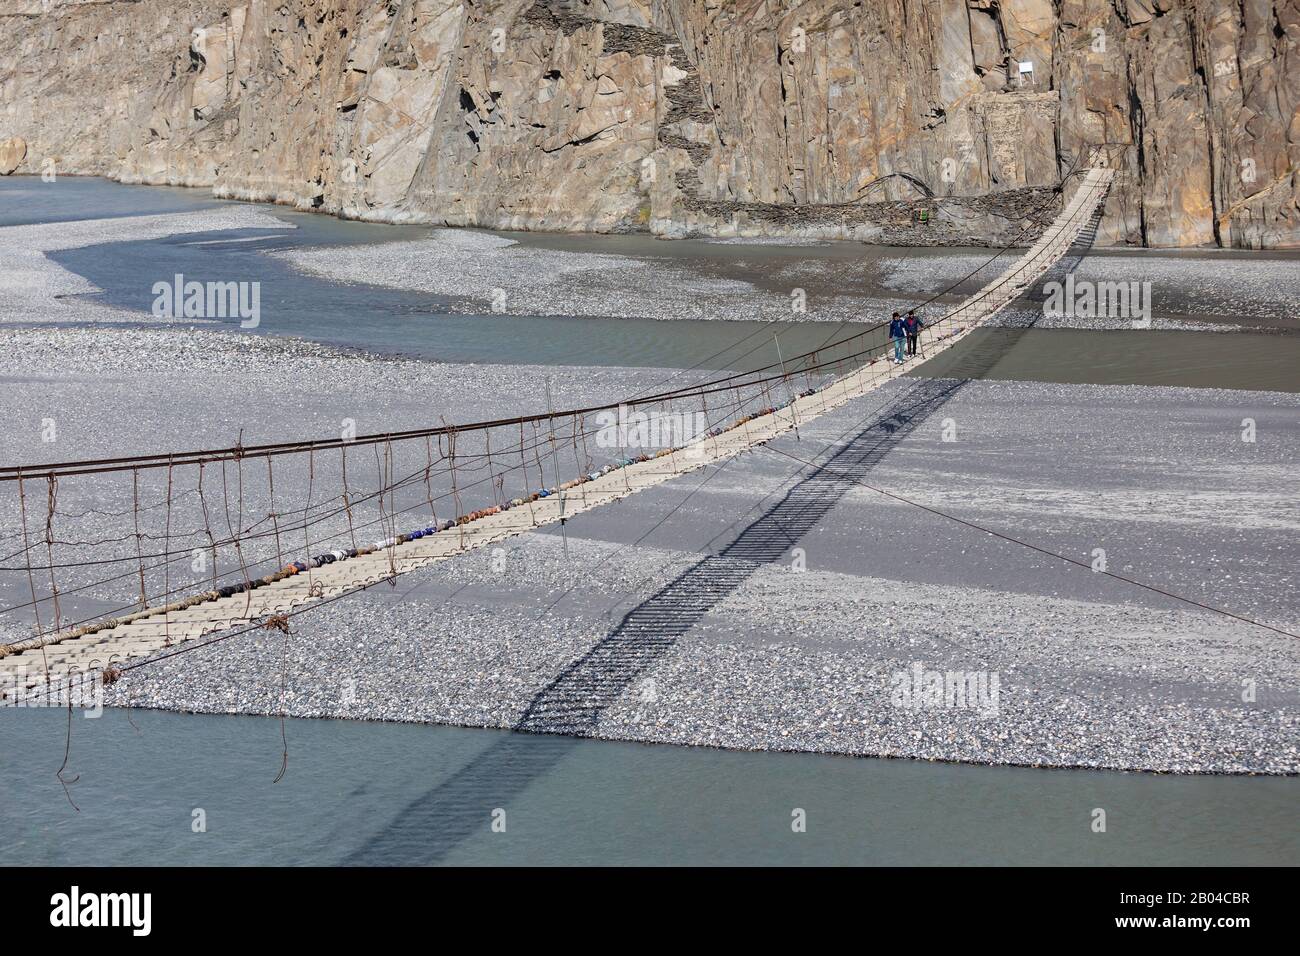 Hussaini suspension bridge passu cones mountain range rocky scenery huzza river gilt baltistan northern areas Pakistan Stock Photo